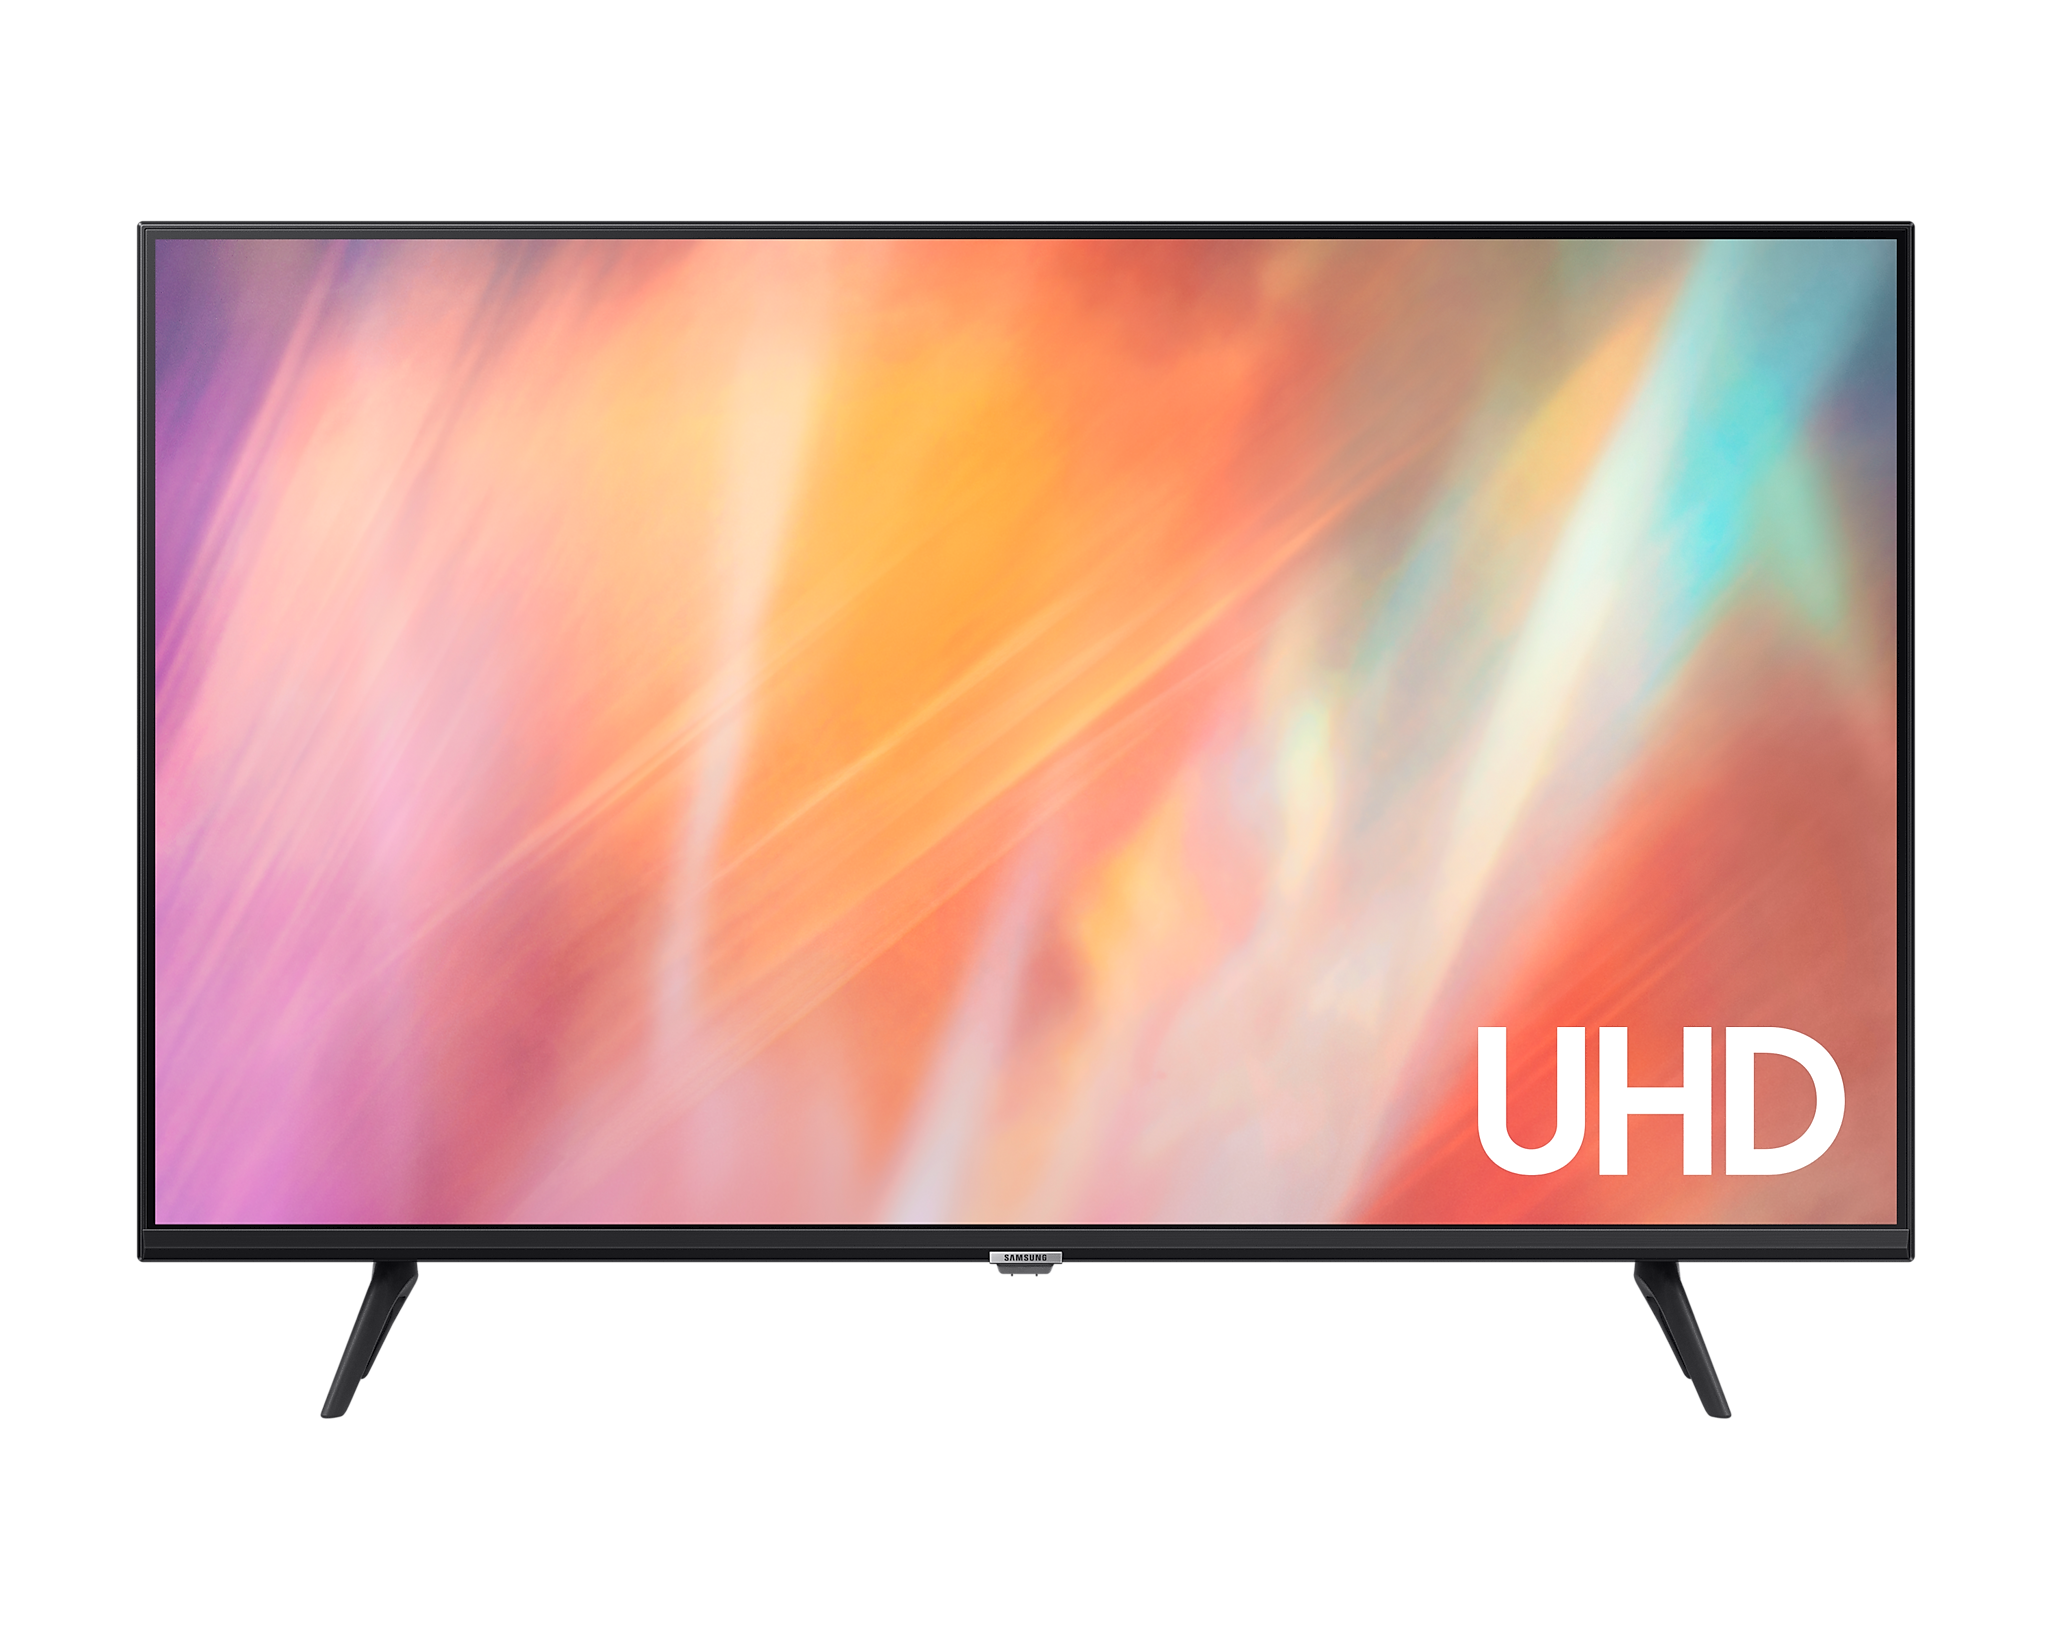 1m 08cm (43") AUE65 Crystal 4K UHD Smart TV